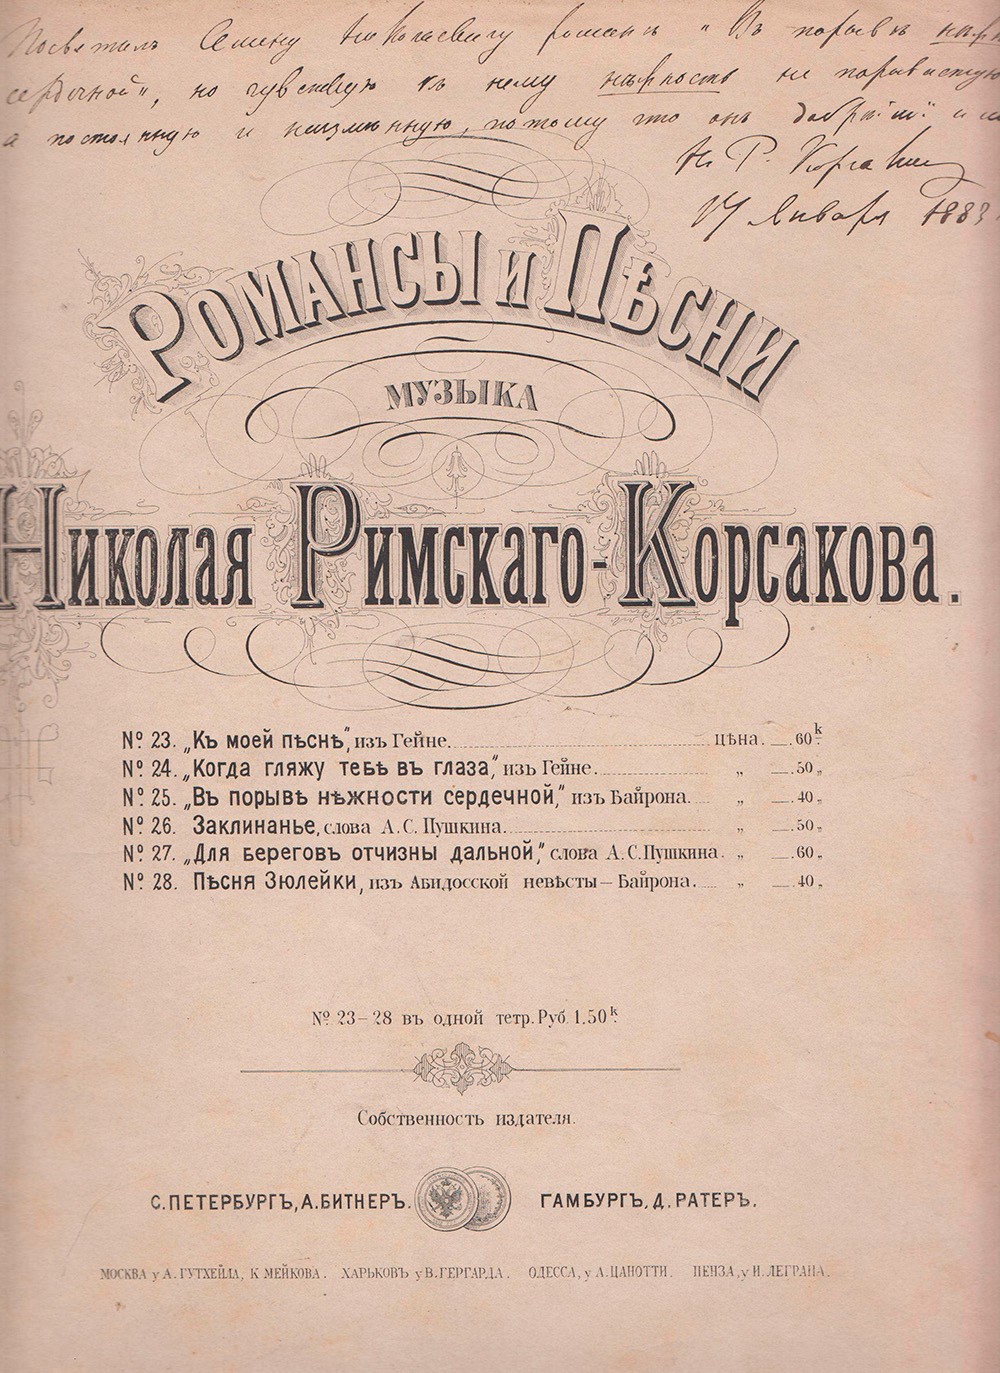 Дарственные надписи Н. А. Римского-Корсакова